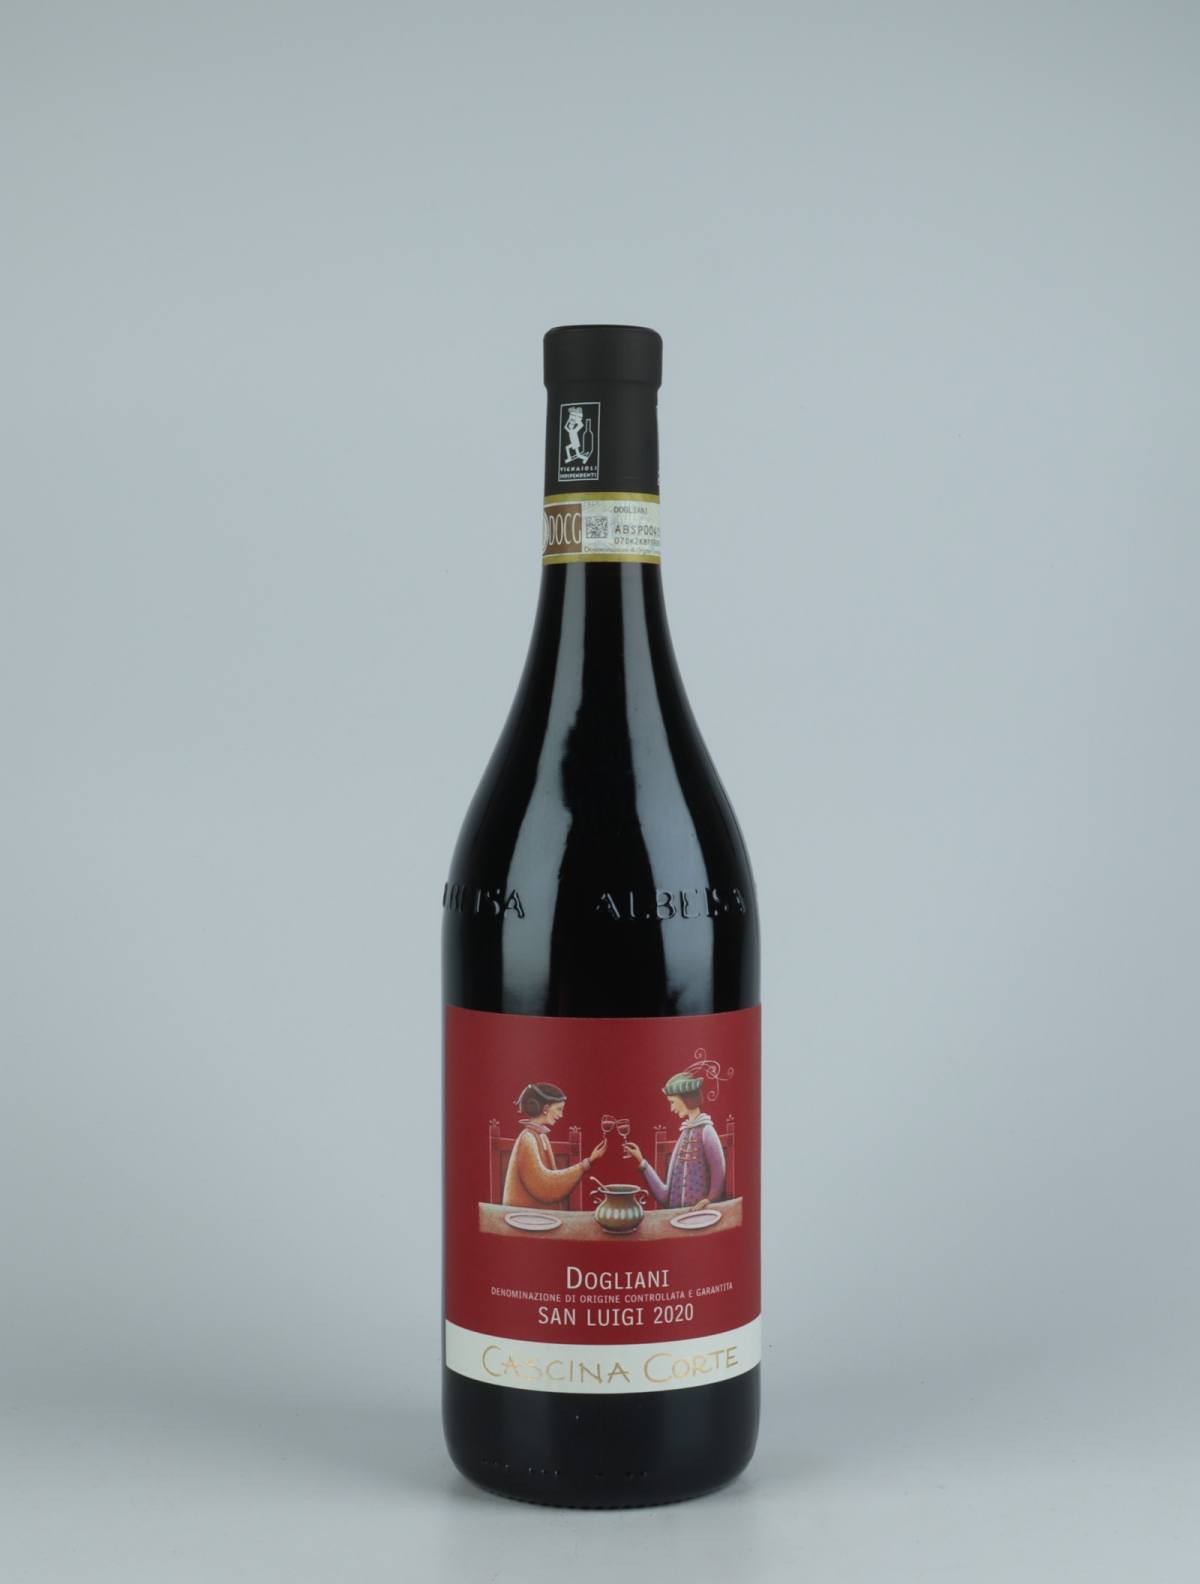 A bottle 2020 Dogliani - San Luigi Red wine from Cascina Corte, Piedmont in Italy